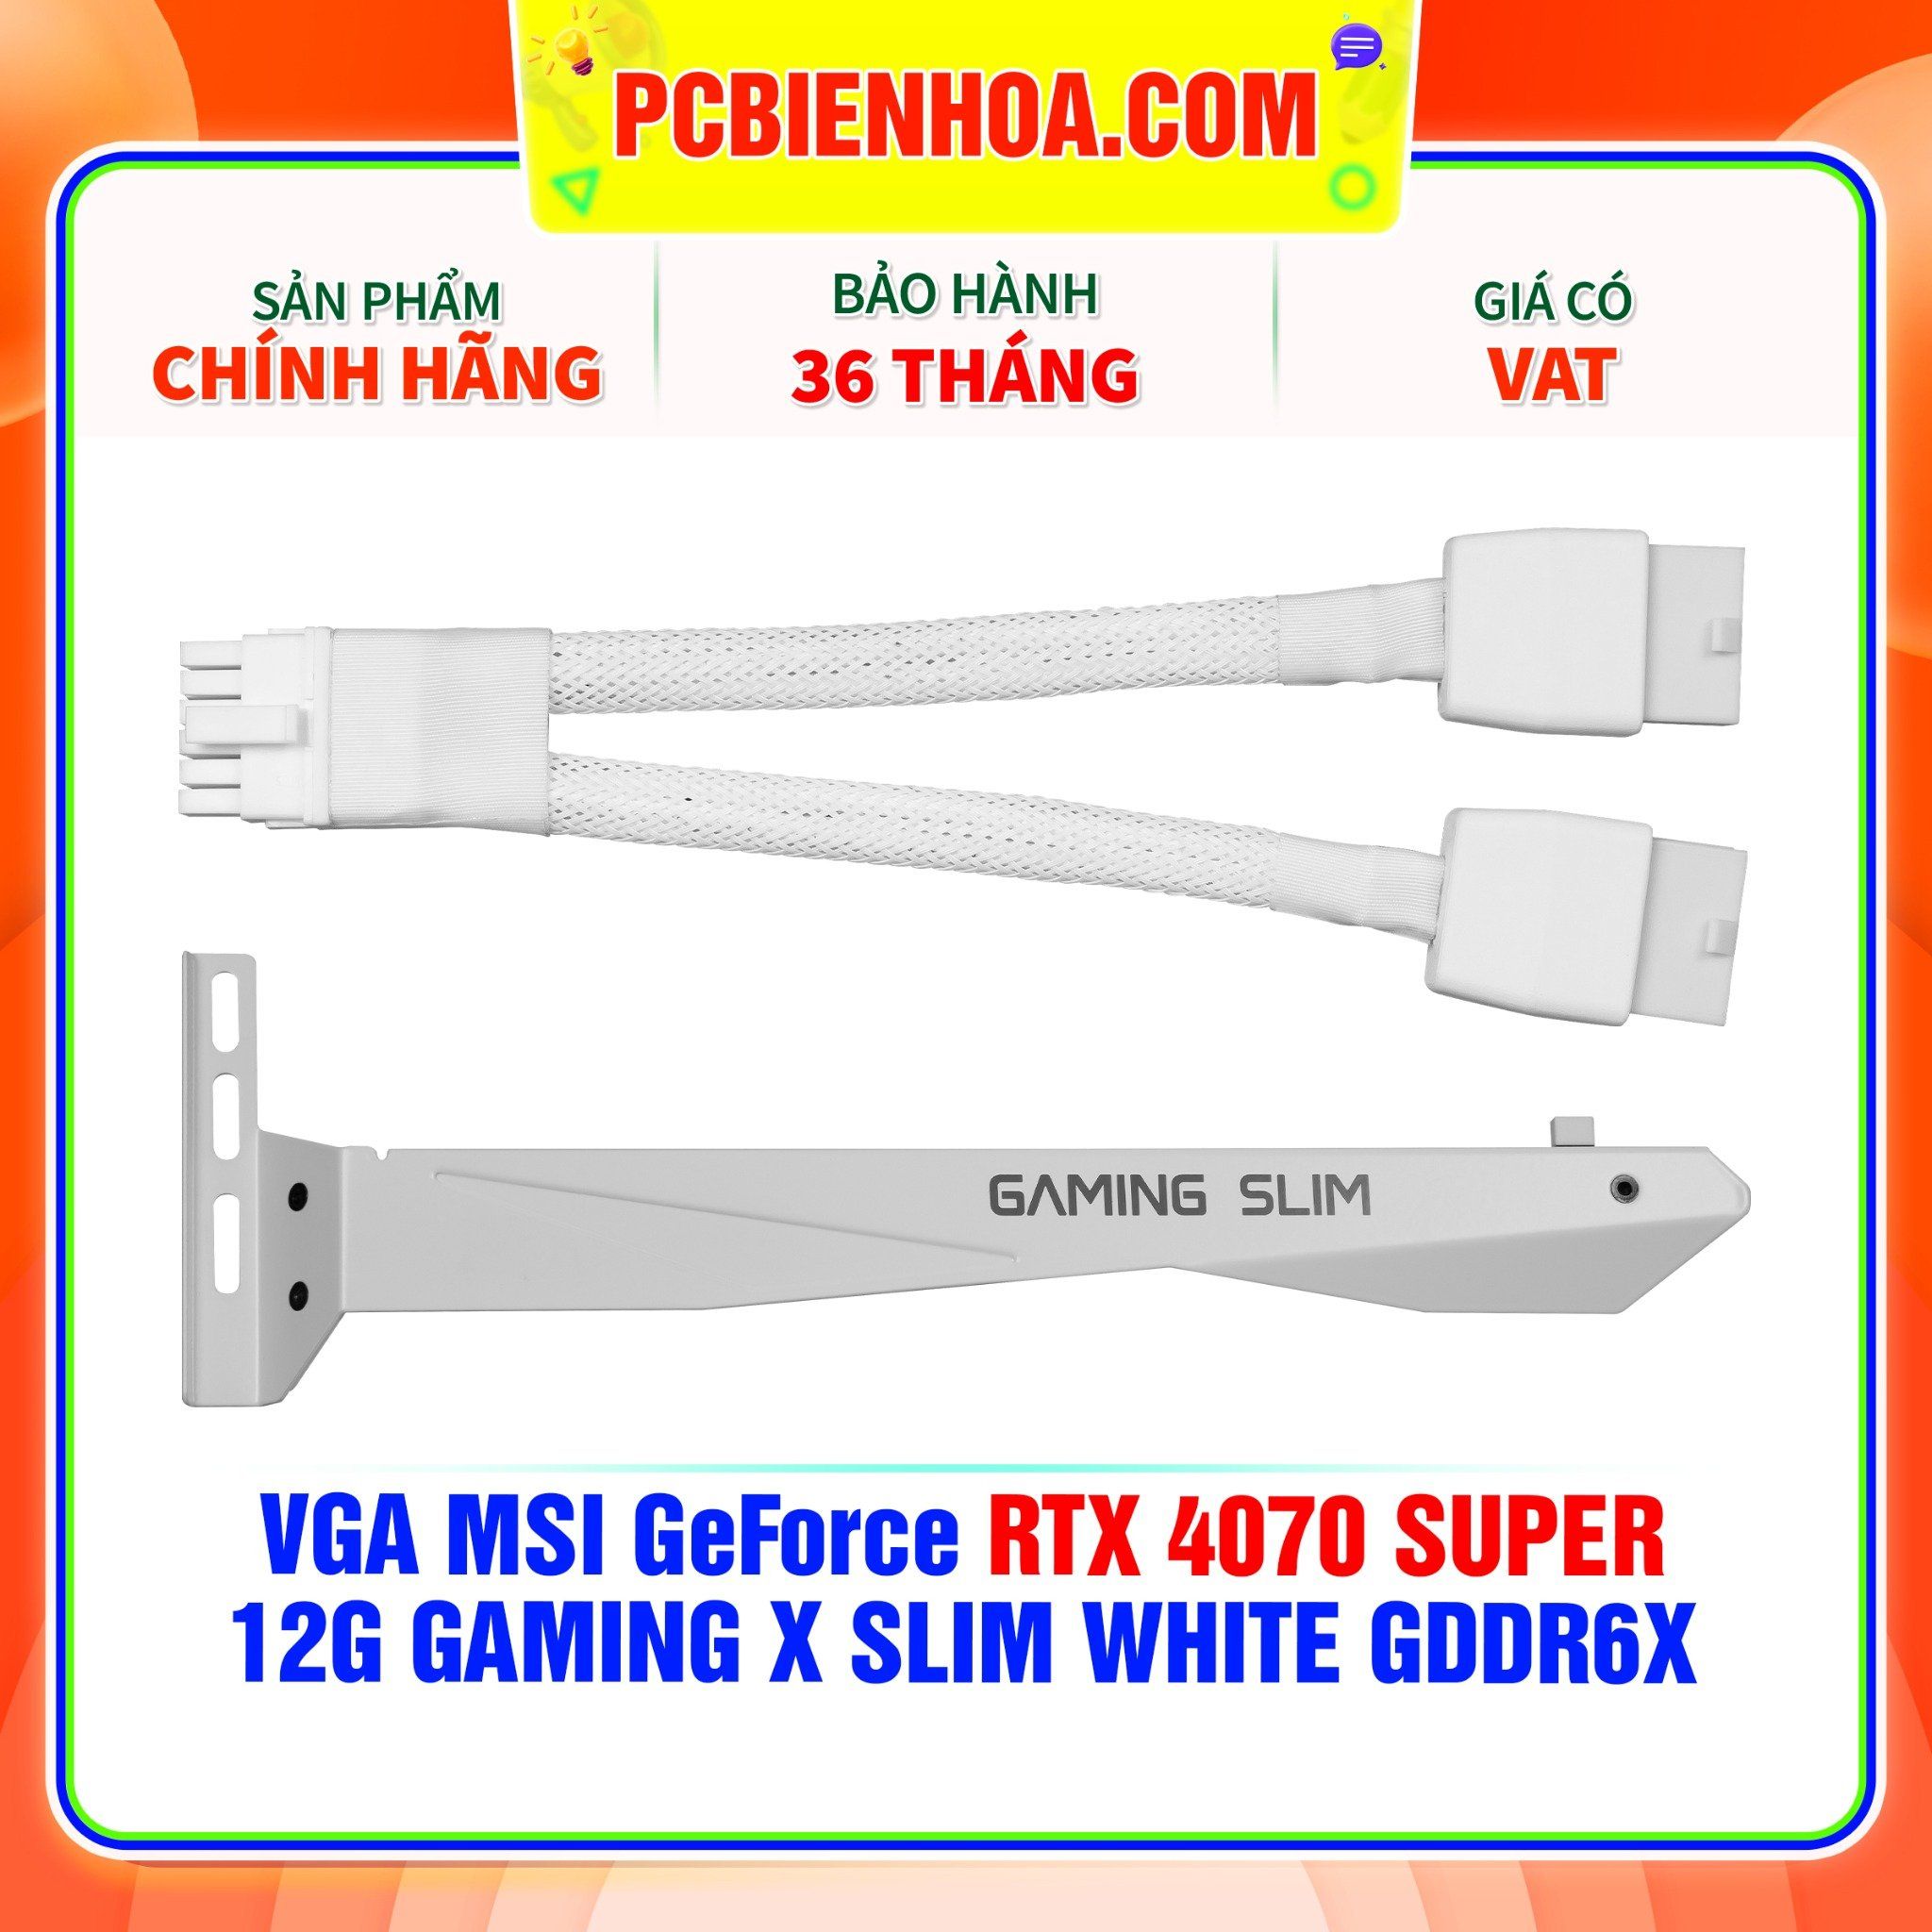  VGA MSI GeForce RTX 4070 SUPER 12G GAMING X SLIM WHITE GDDR6X 